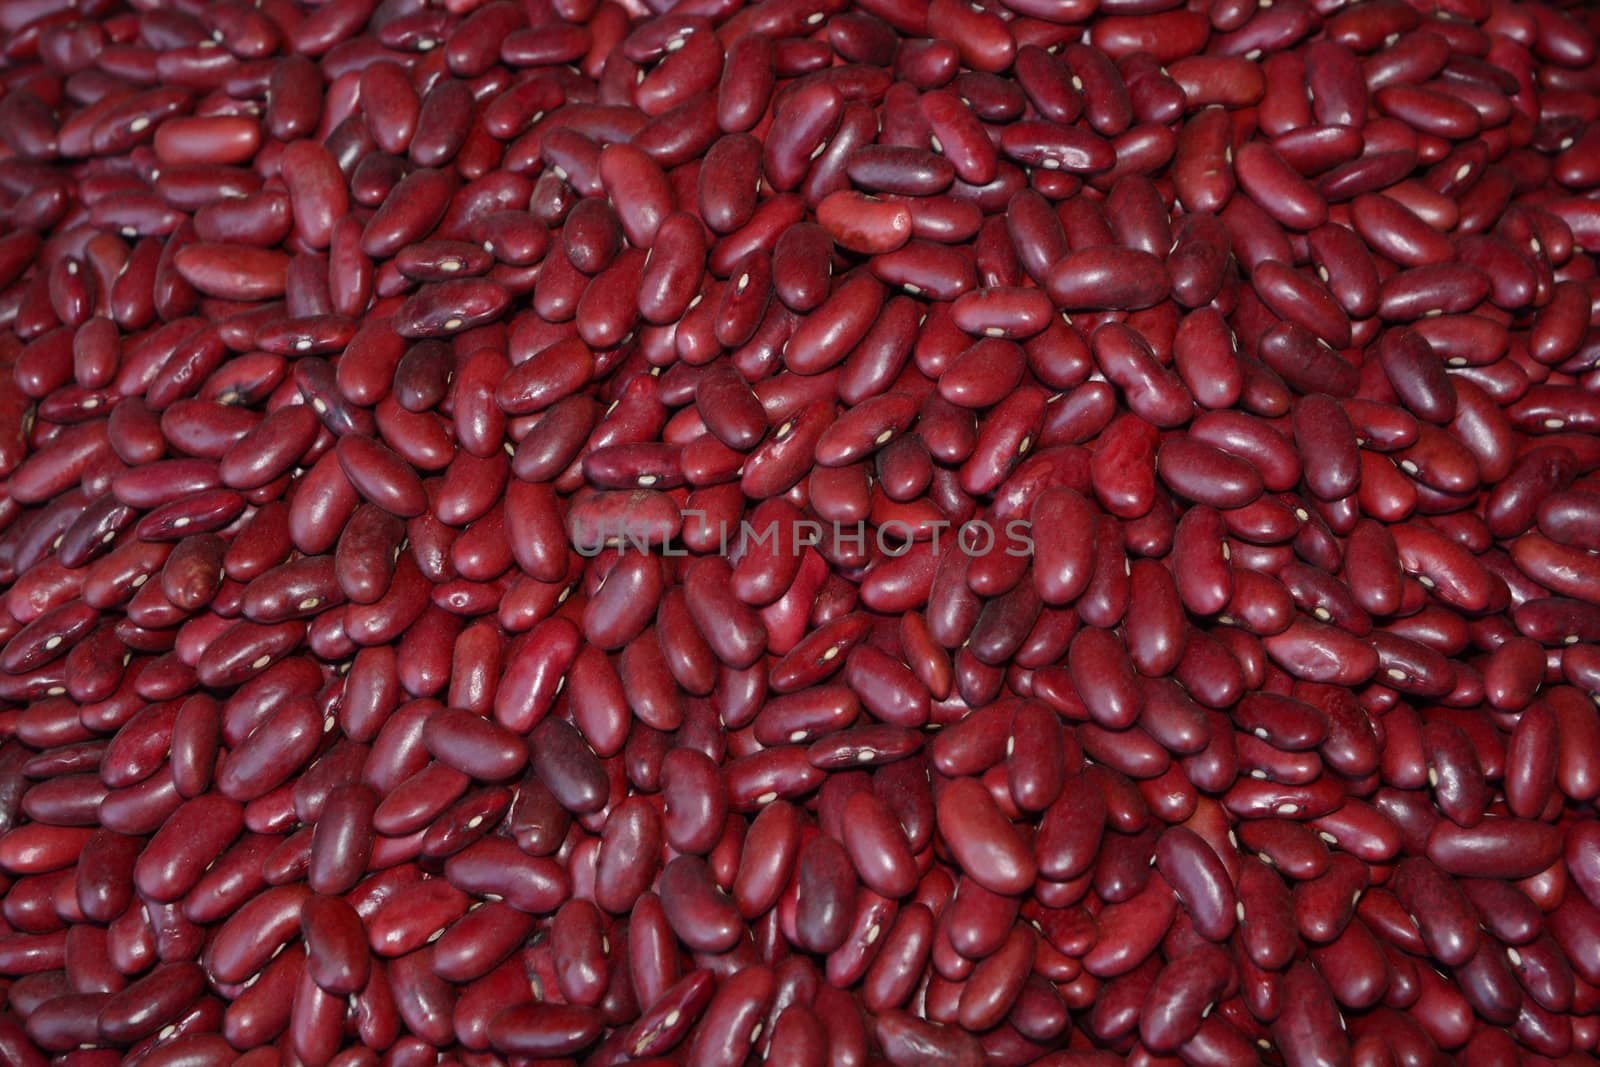 Kidney bean, Red kidney bean by ideation90